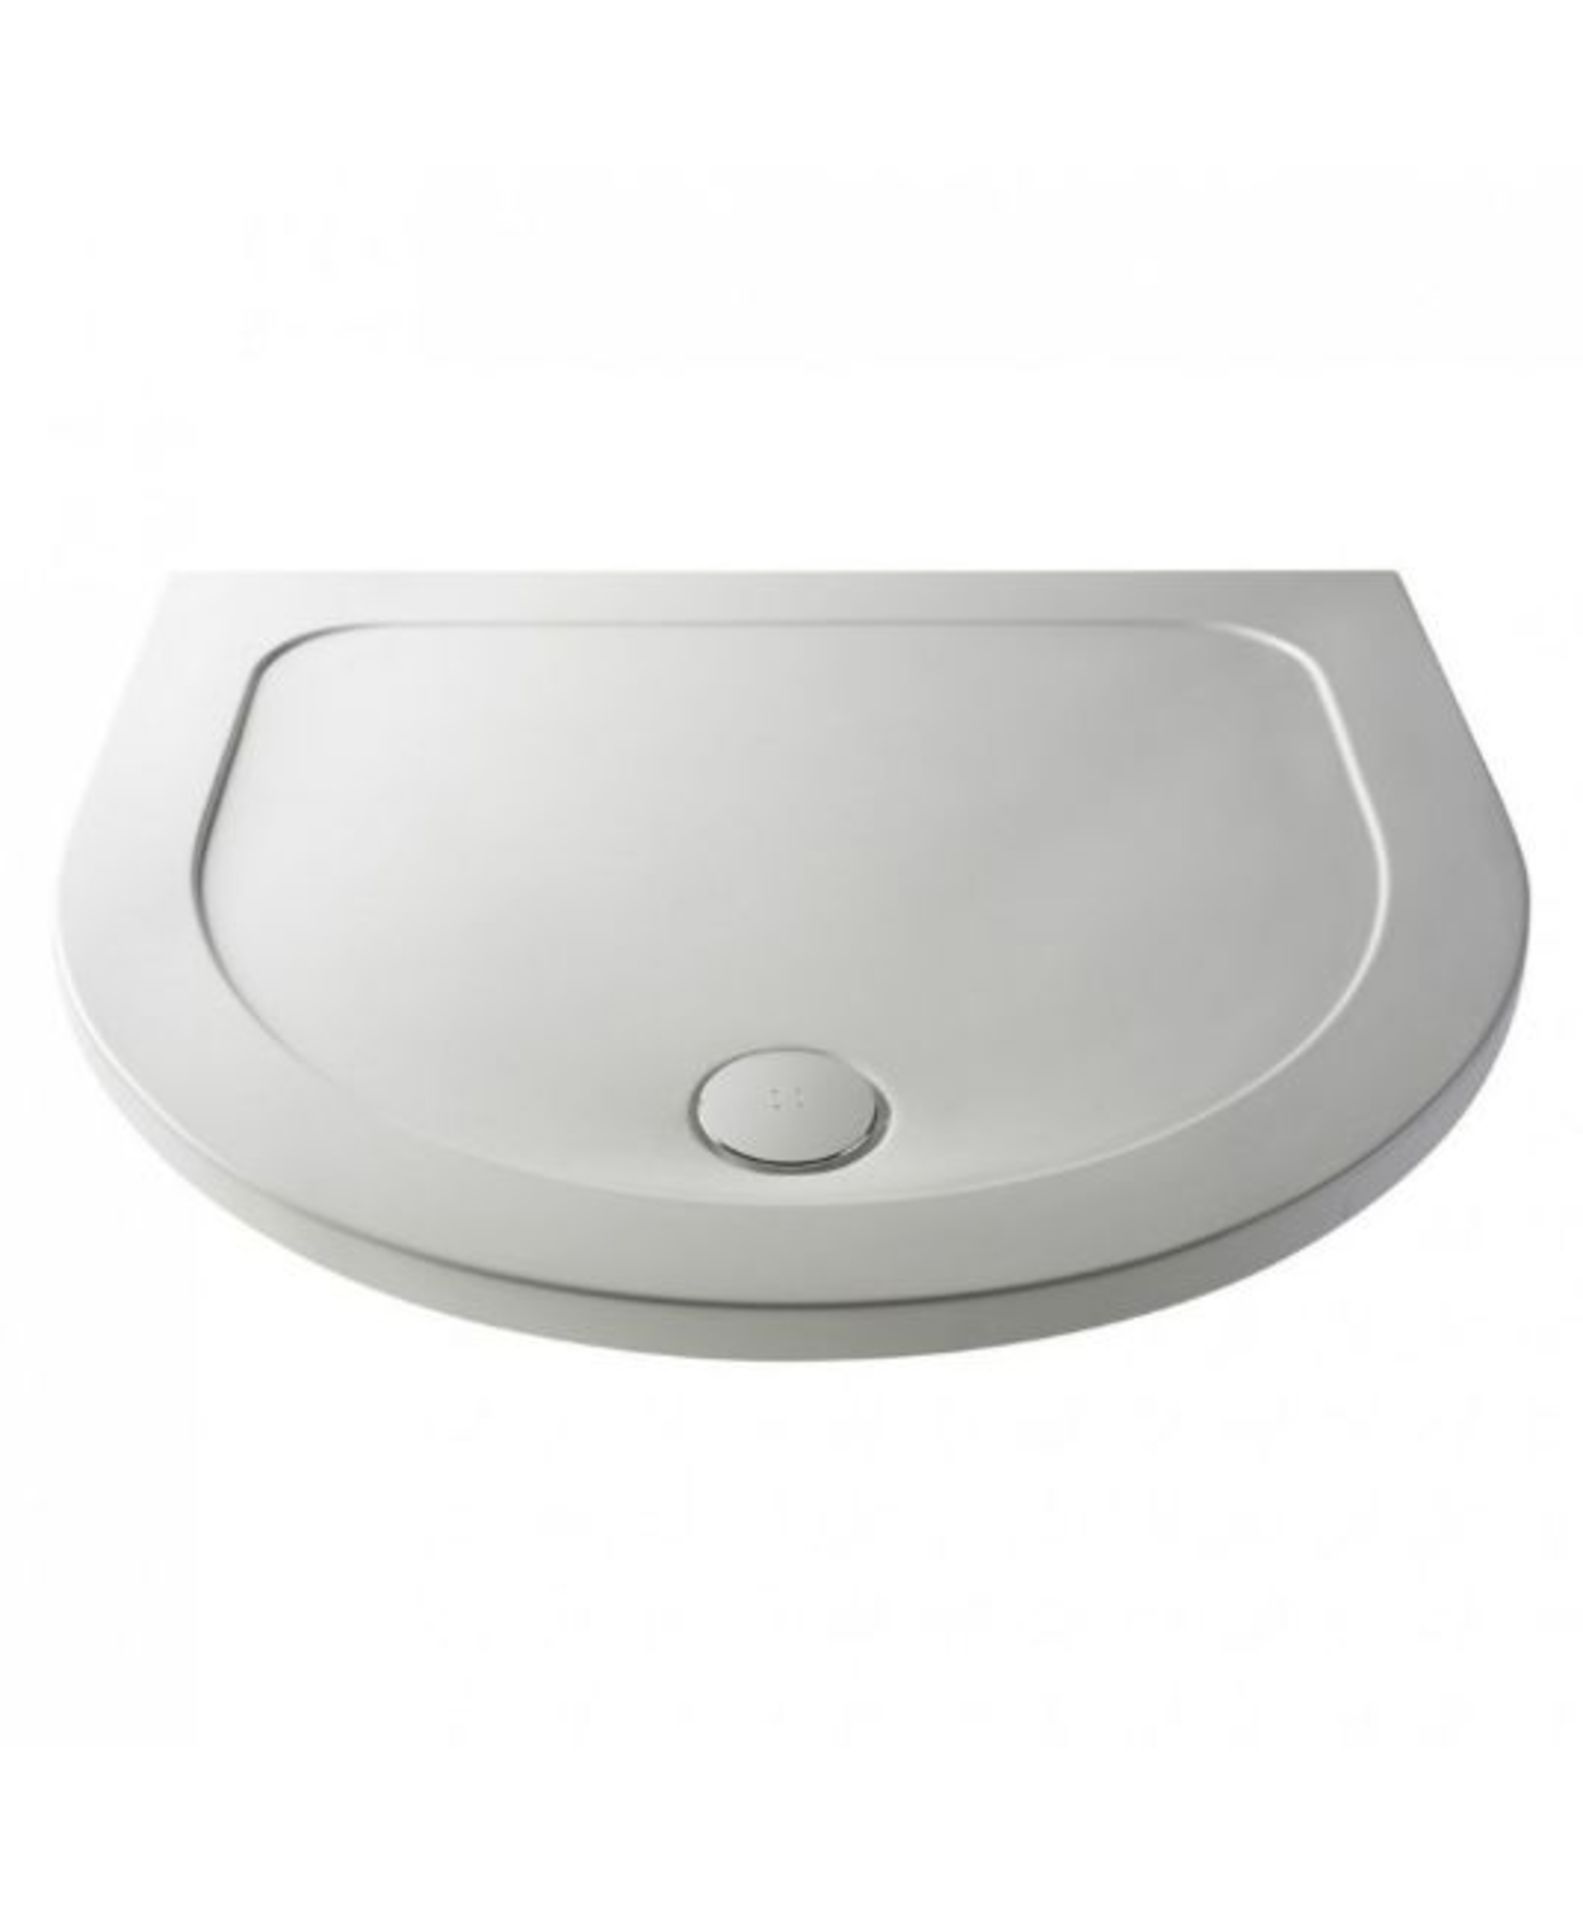 New (Pc129) Twyford's 770mm Hydro D Shape White Shower Tray. Low Profile Ultra Slim Design Gel ...